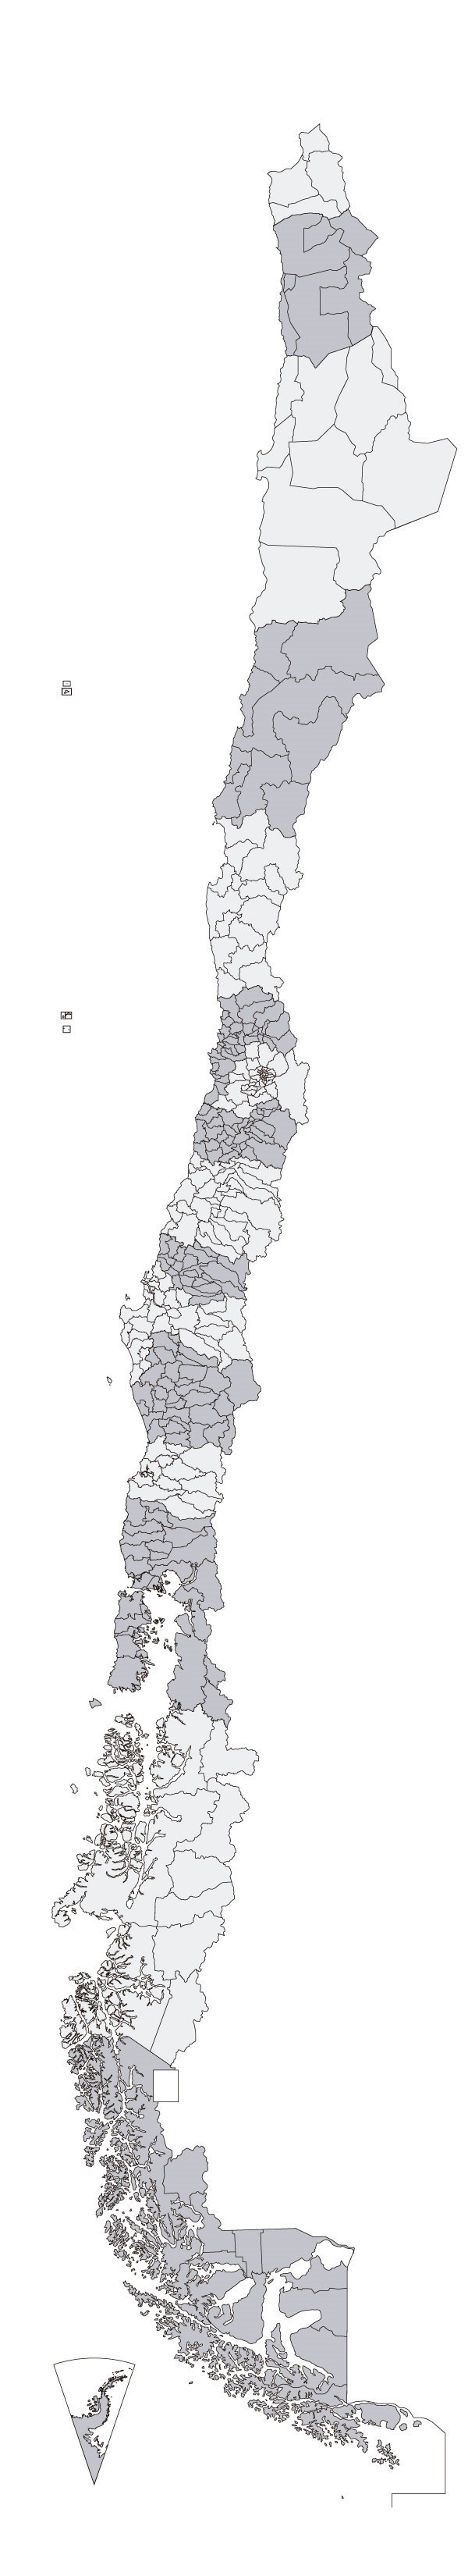 mapa de Chile para colorear